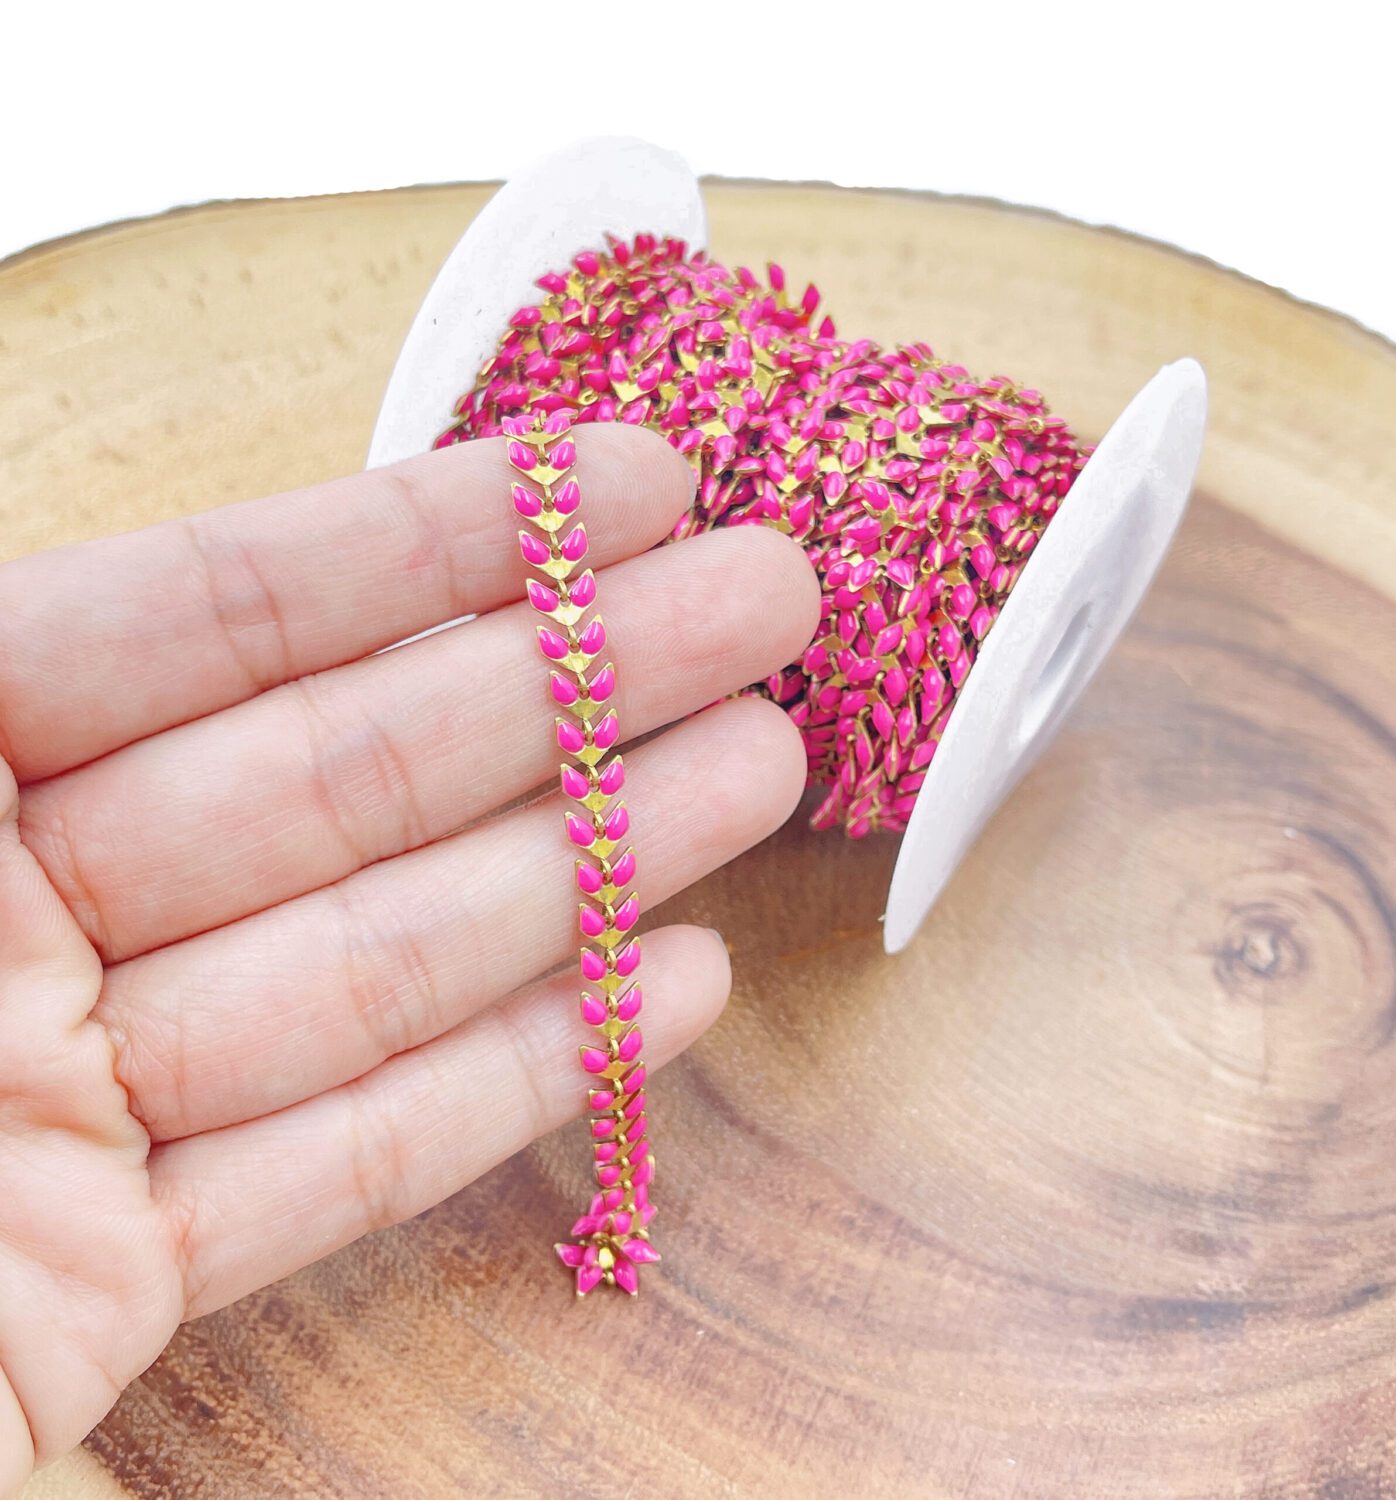  ARTIBETTER 1 Roll Crafts Filling Bead Chain Beaded